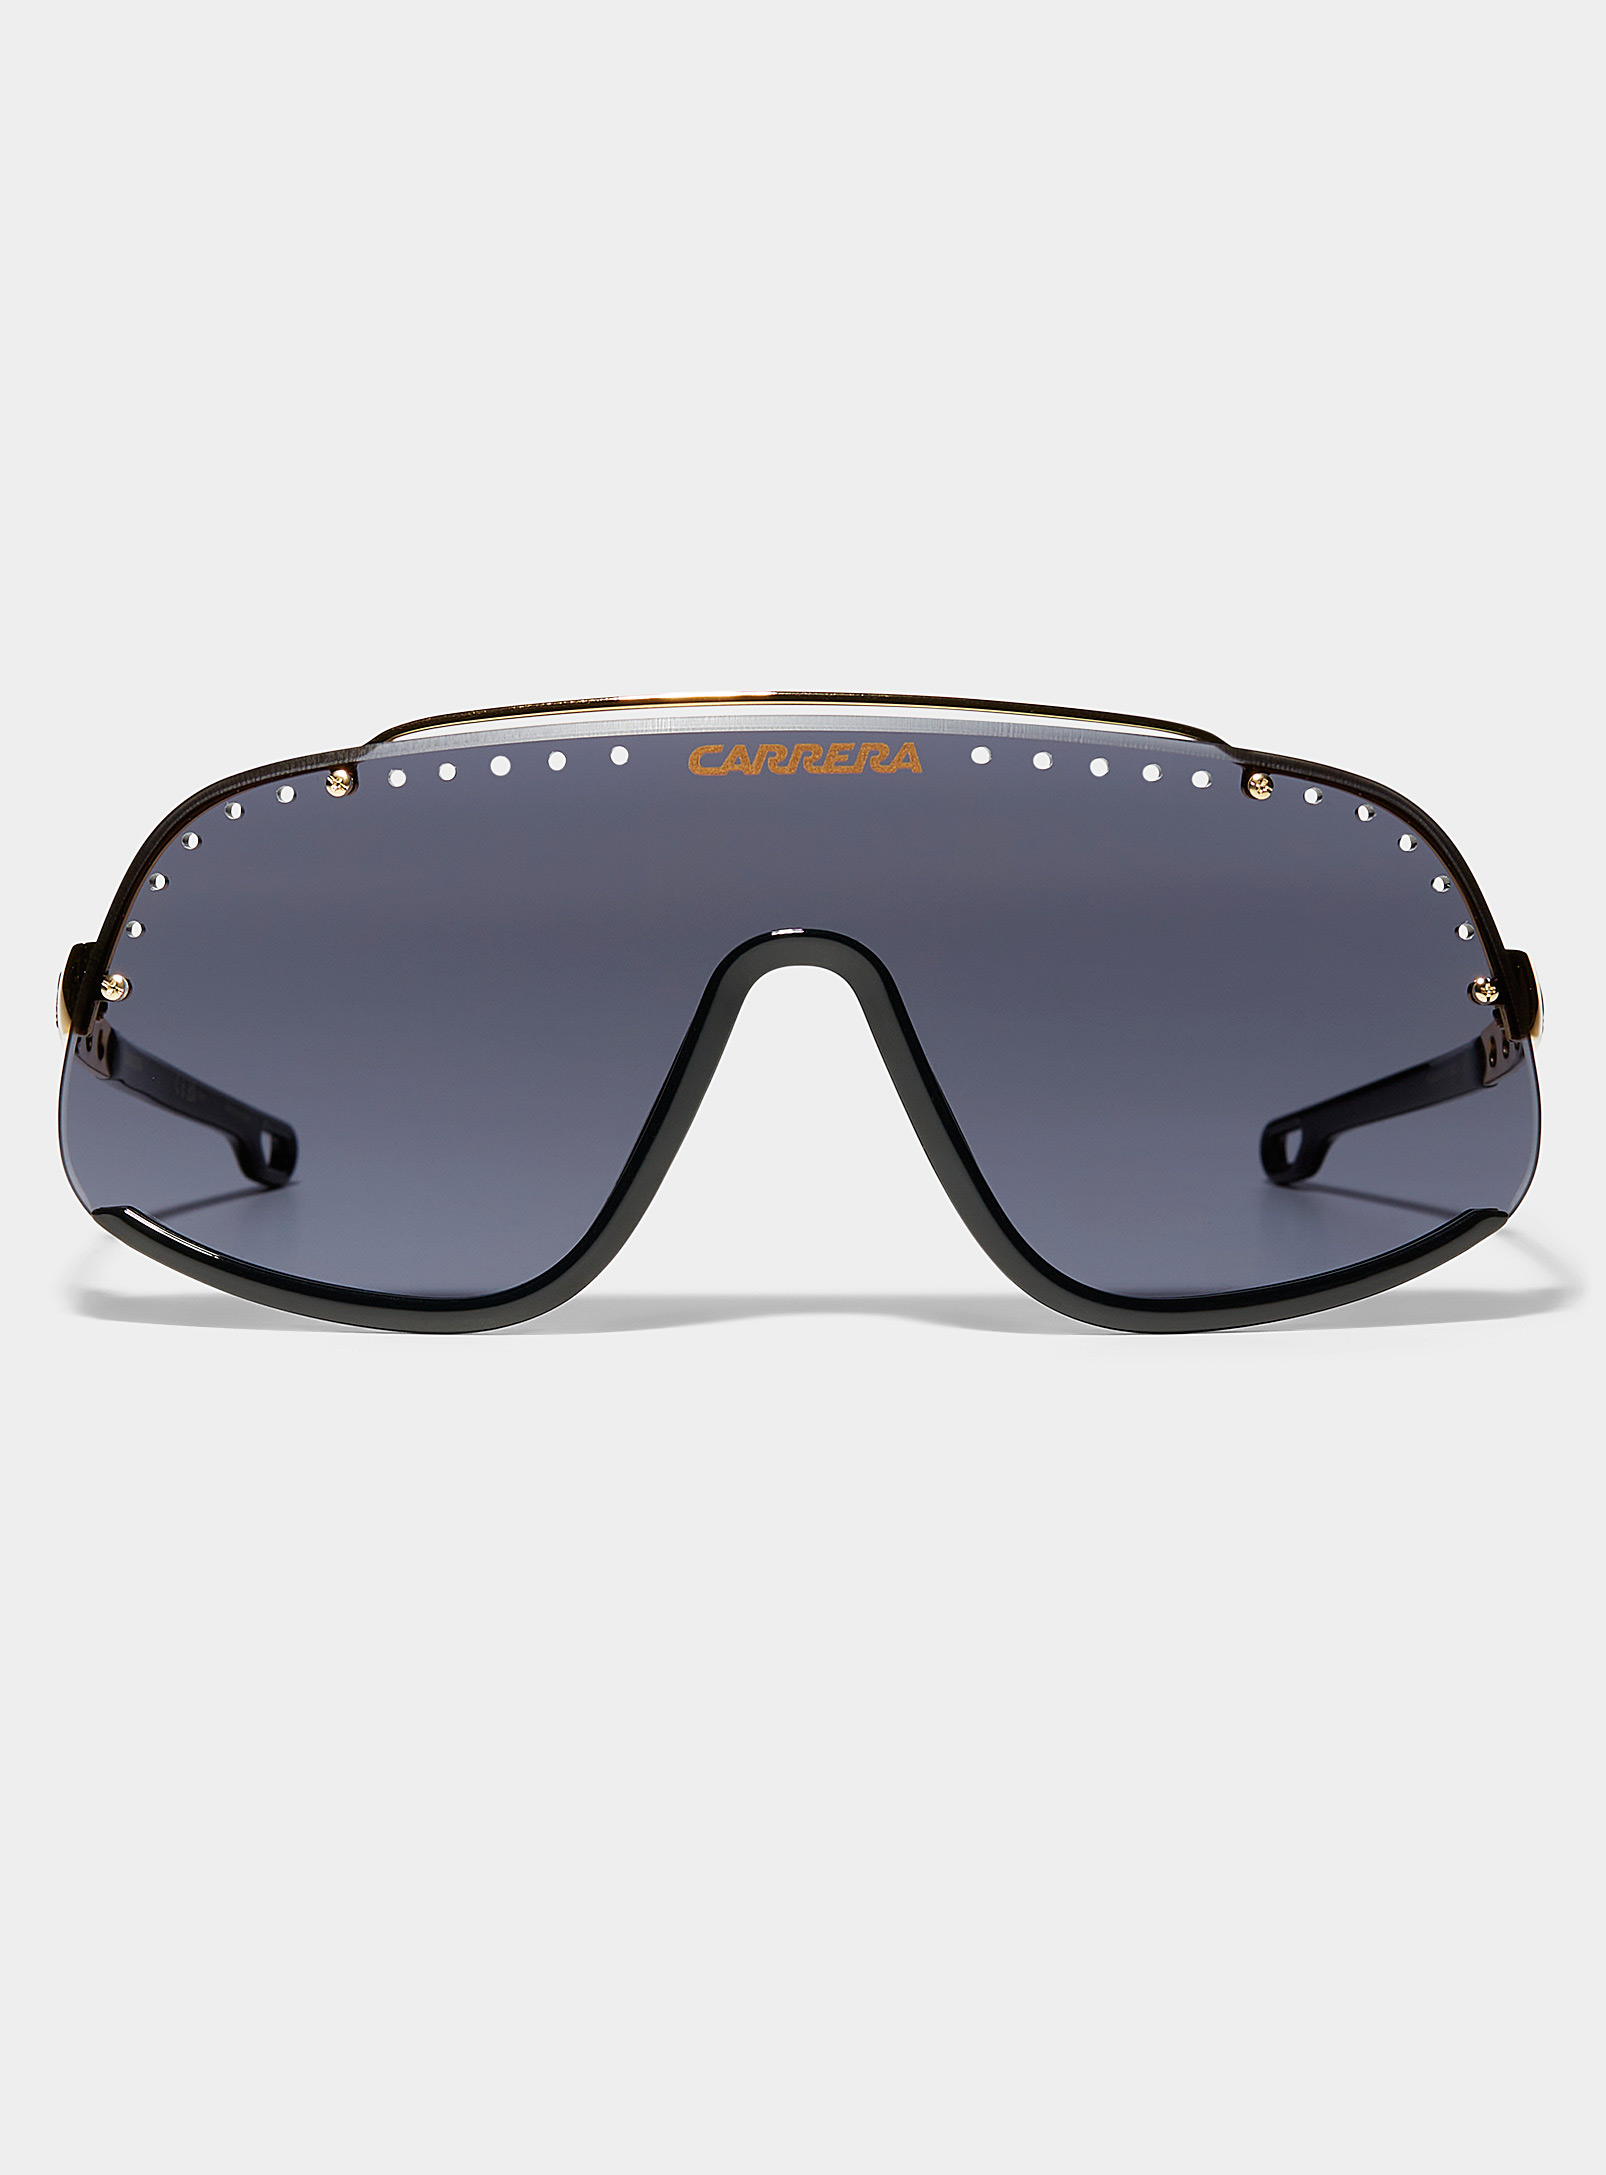 Carrera - Women's Flaglab shield sunglasses